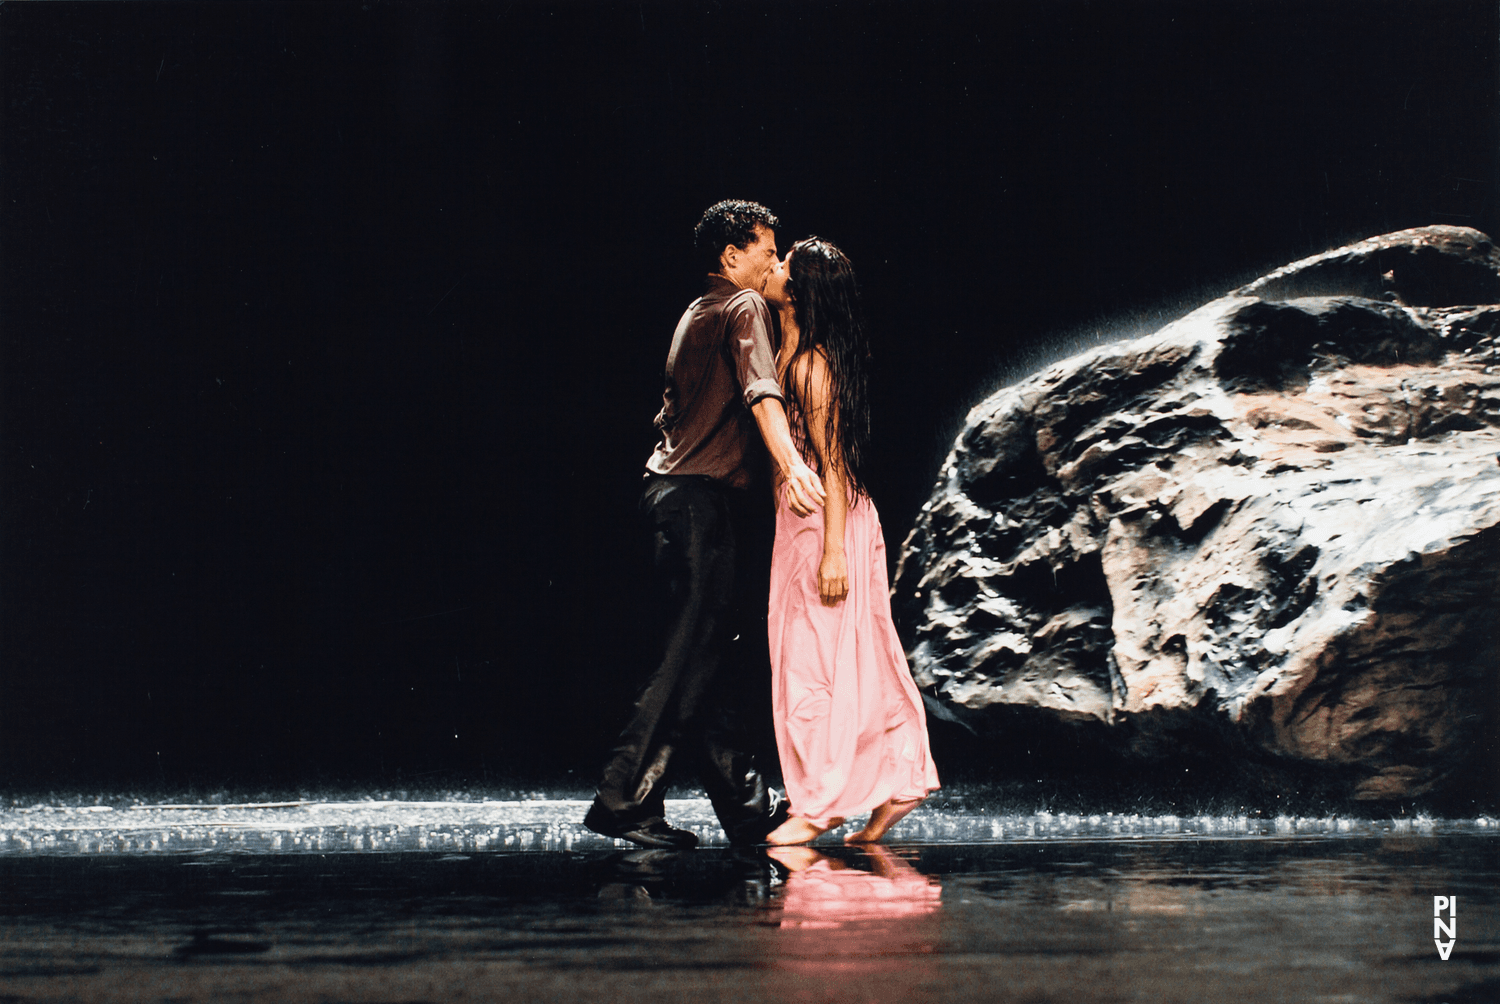 Fernando Suels Mendoza et Silvia Farias Heredia dans « Vollmond (Pleine lune) » de Pina Bausch, 27 septembre 2006